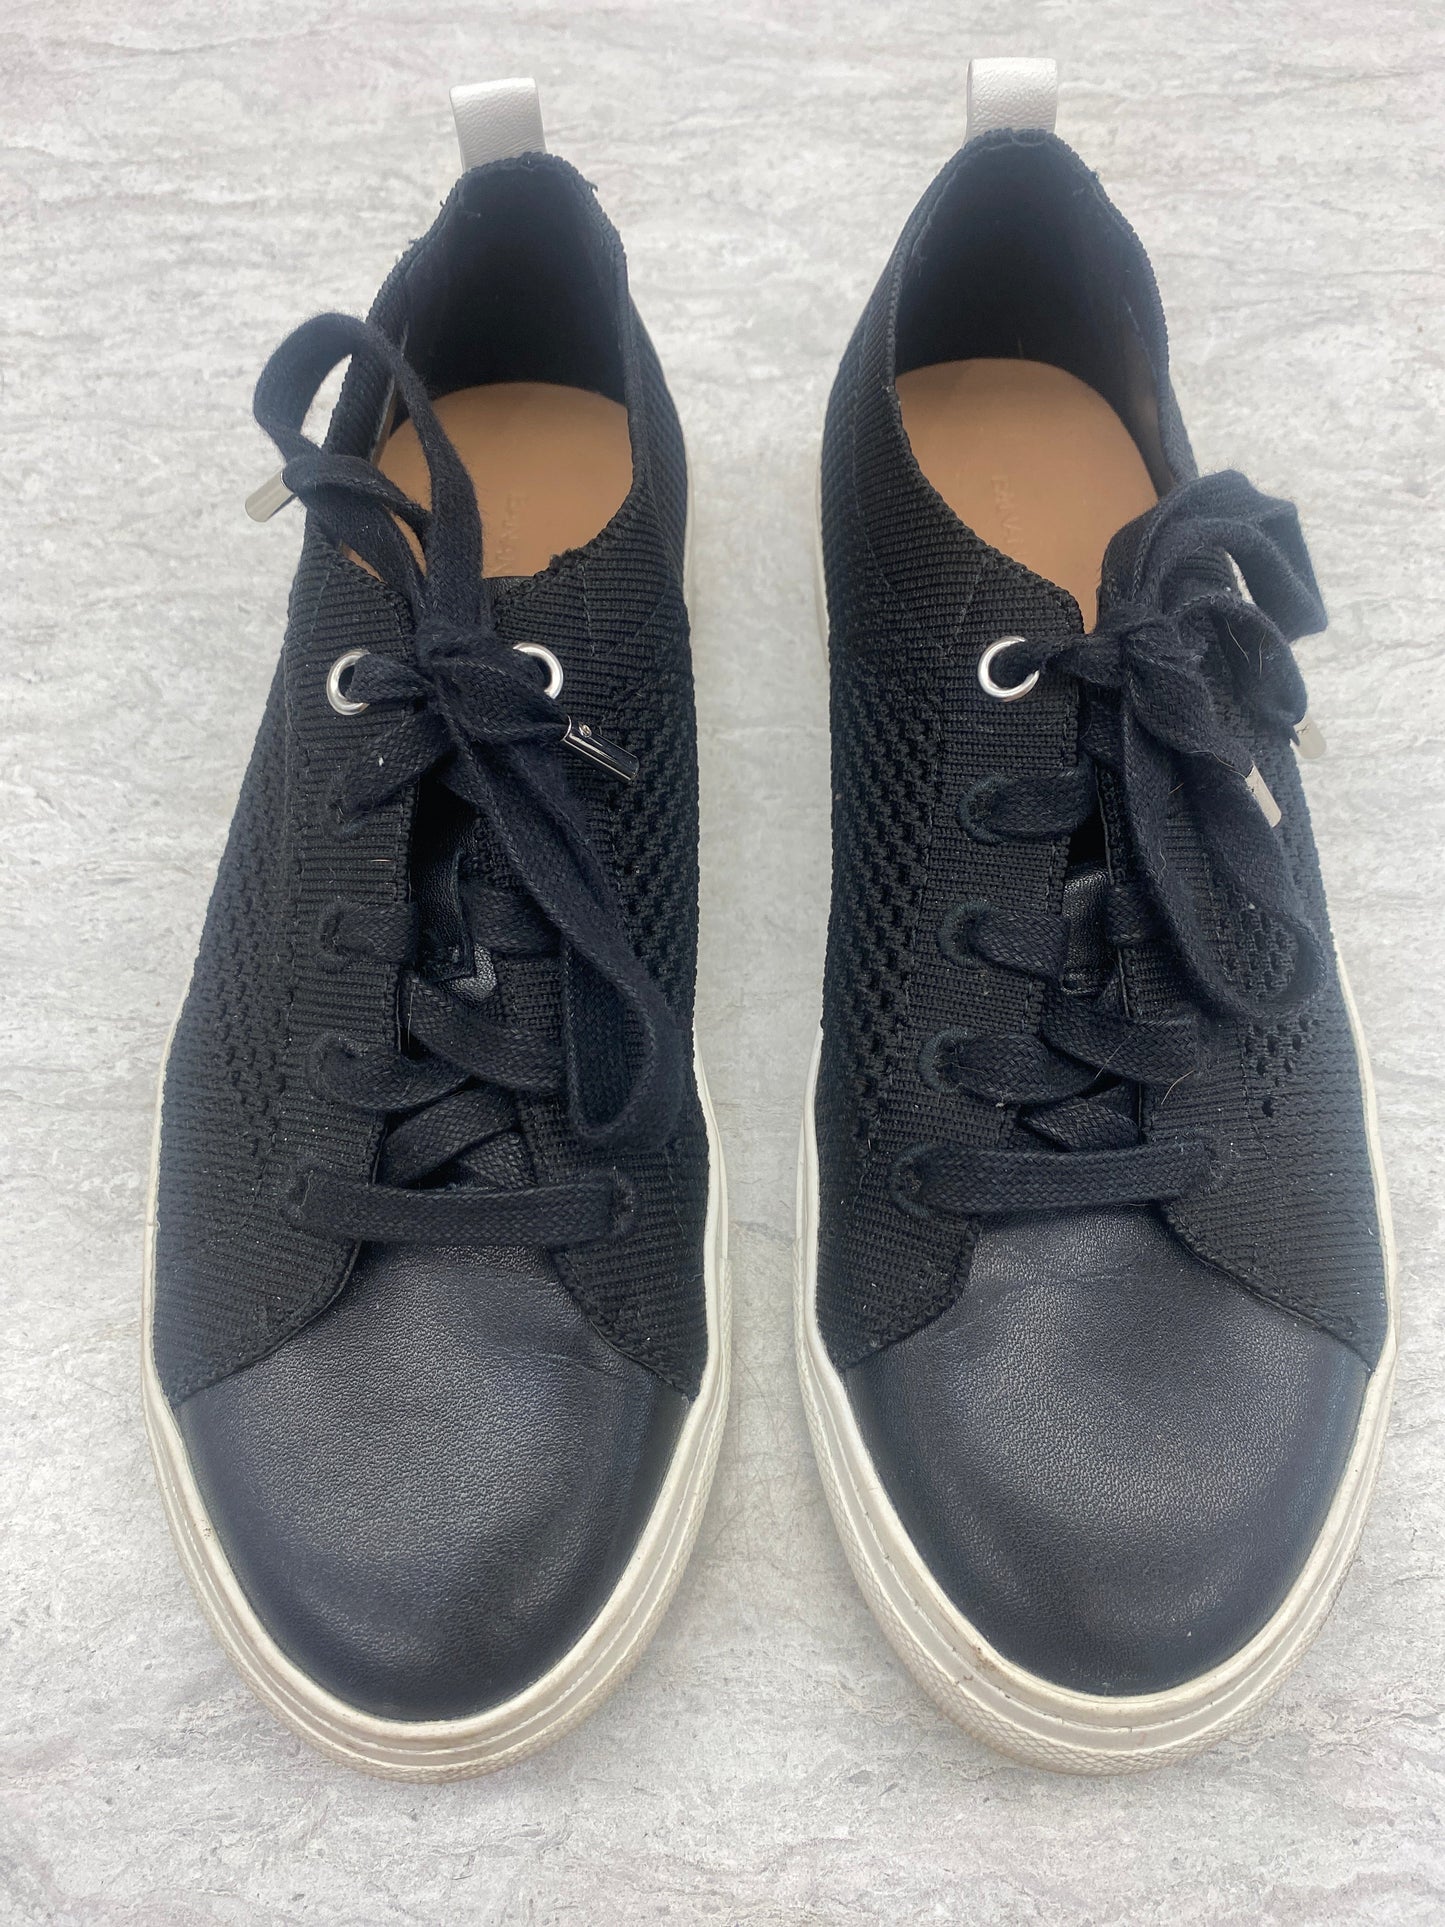 Black Shoes Sneakers Banana Republic, Size 7.5